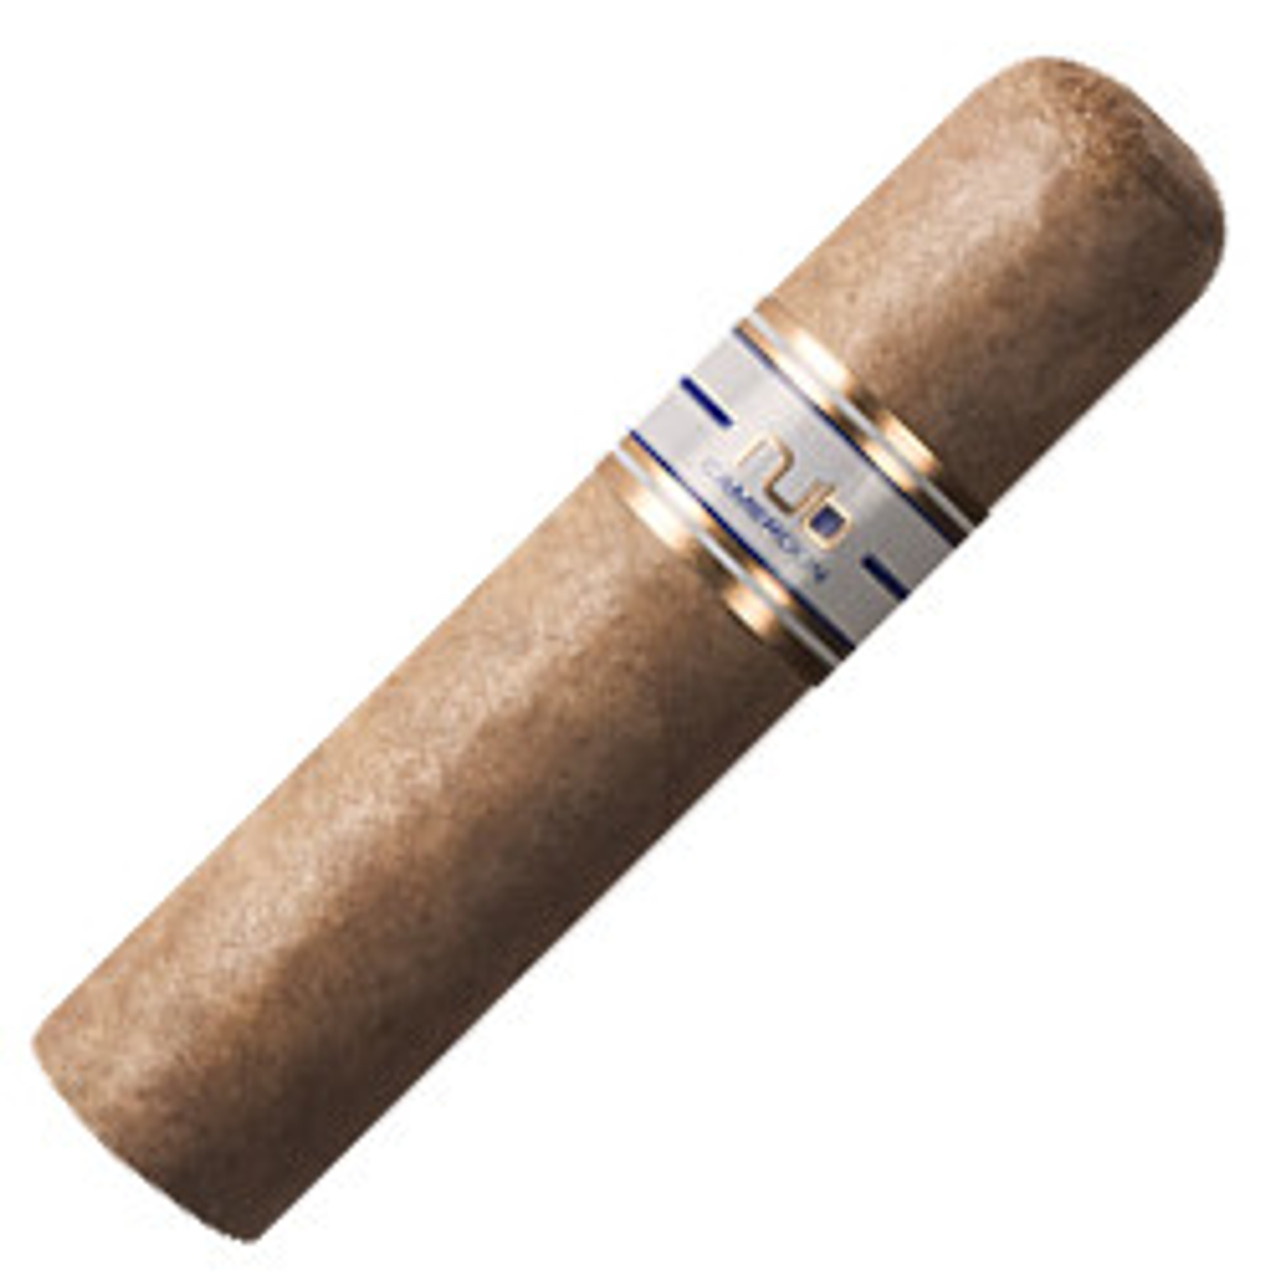 Nub 460 Cameroon Cigars - 4 x 60 Single